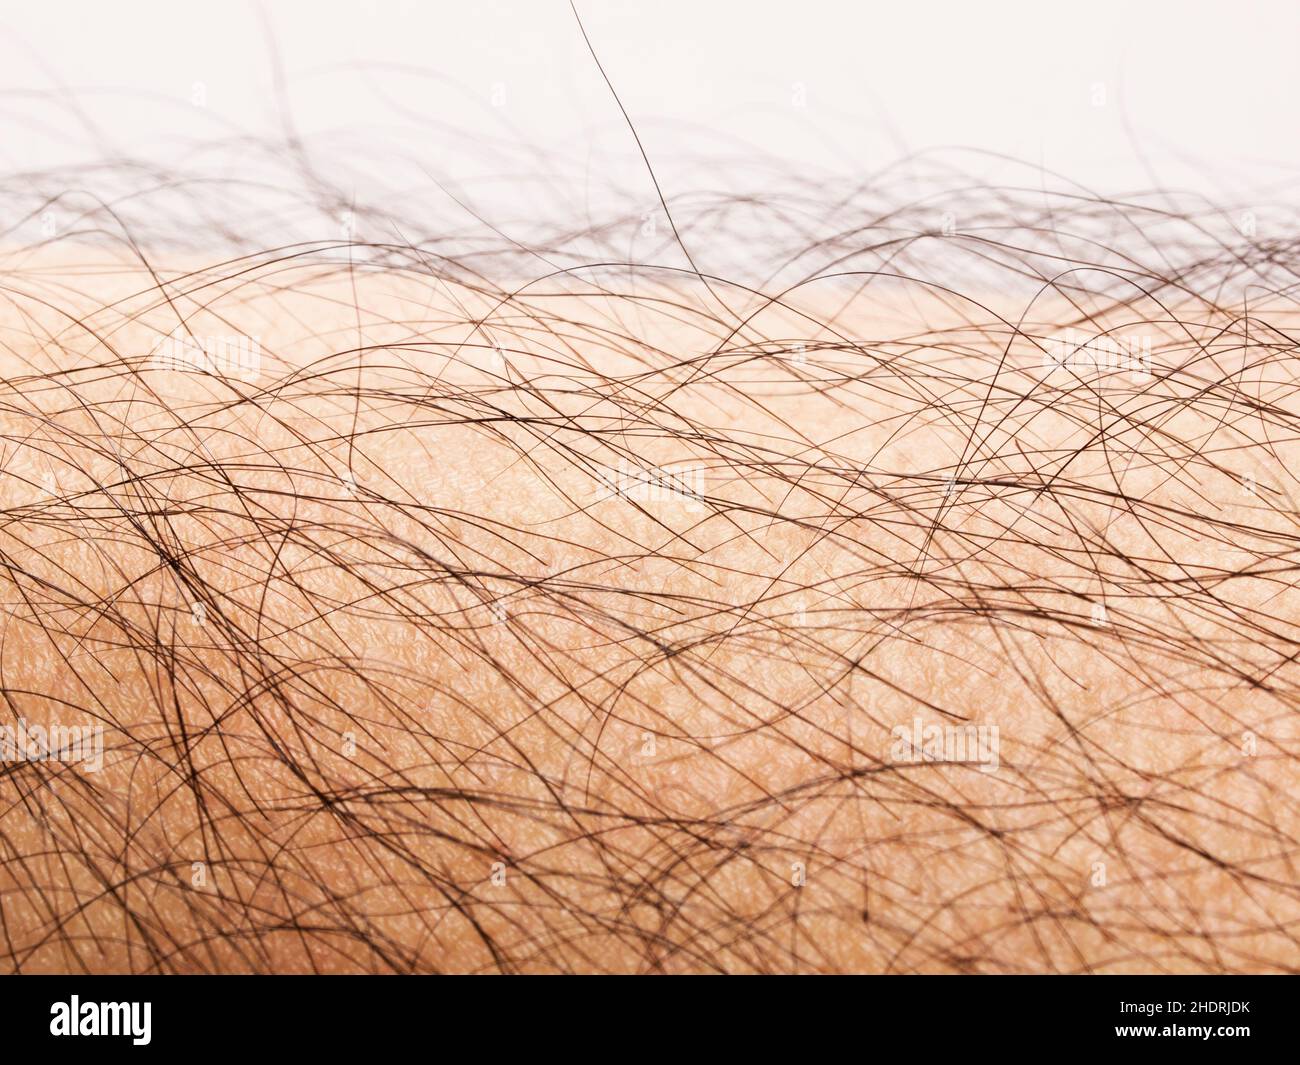 skin, hair, body hair, growth of hair, skins, hairs, body hairs Stock Photo